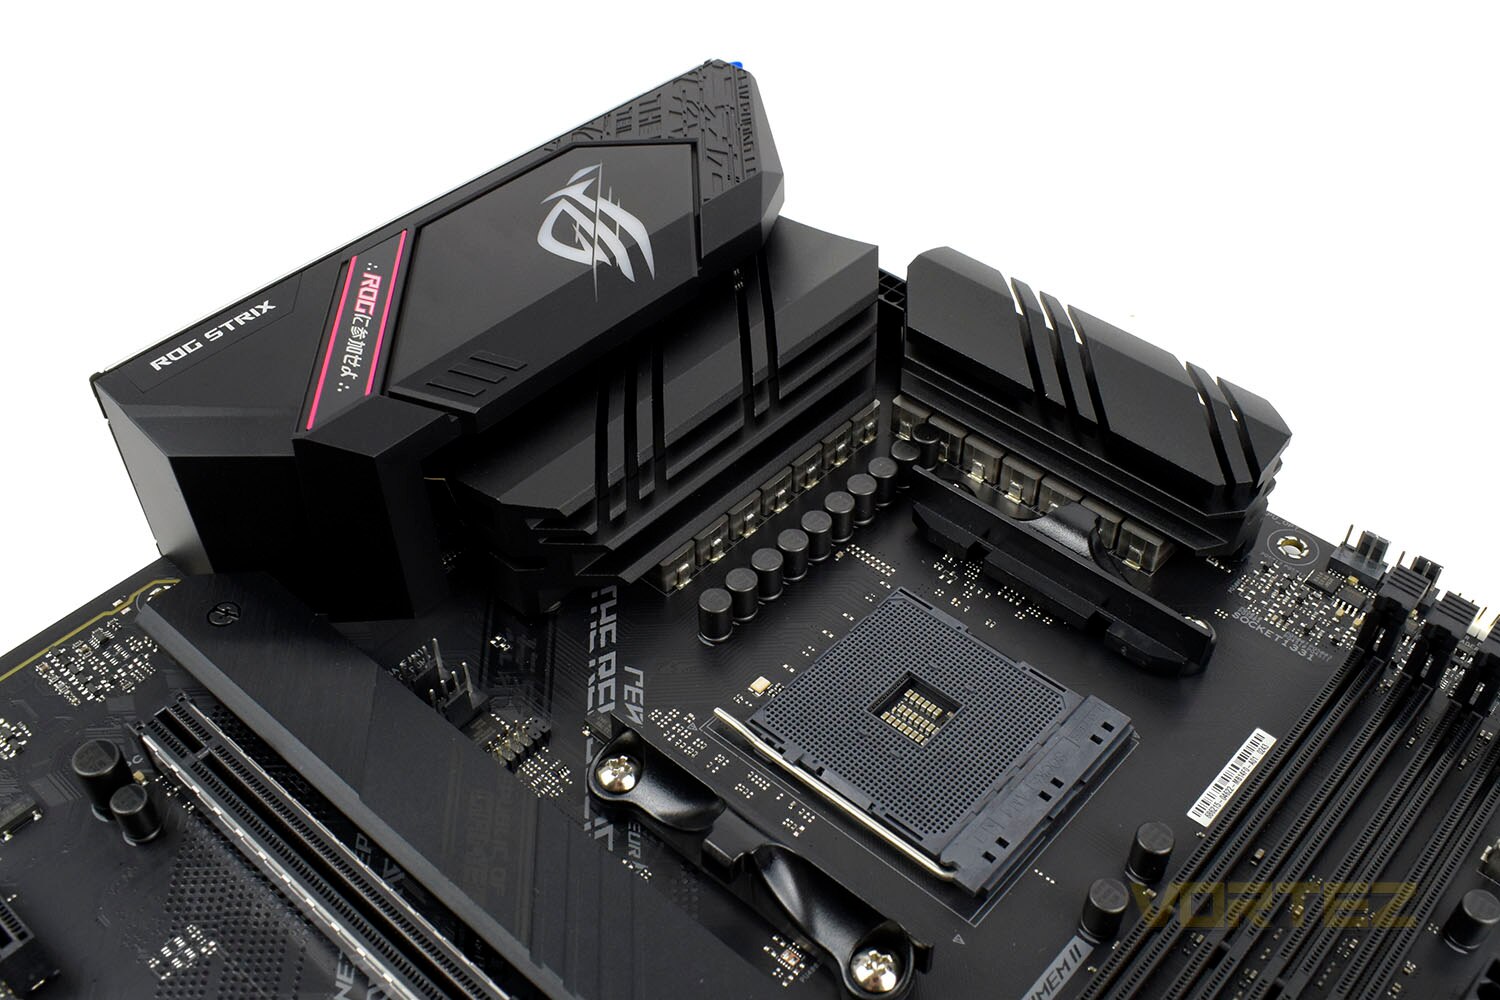 ASUS ROG STRIX B550-F GAMING Motherboard  AMD B550 For AMD AM4 Supports AMD Ryzen5000 4000 3000series 4 x DDR4 PCI-E 4.0